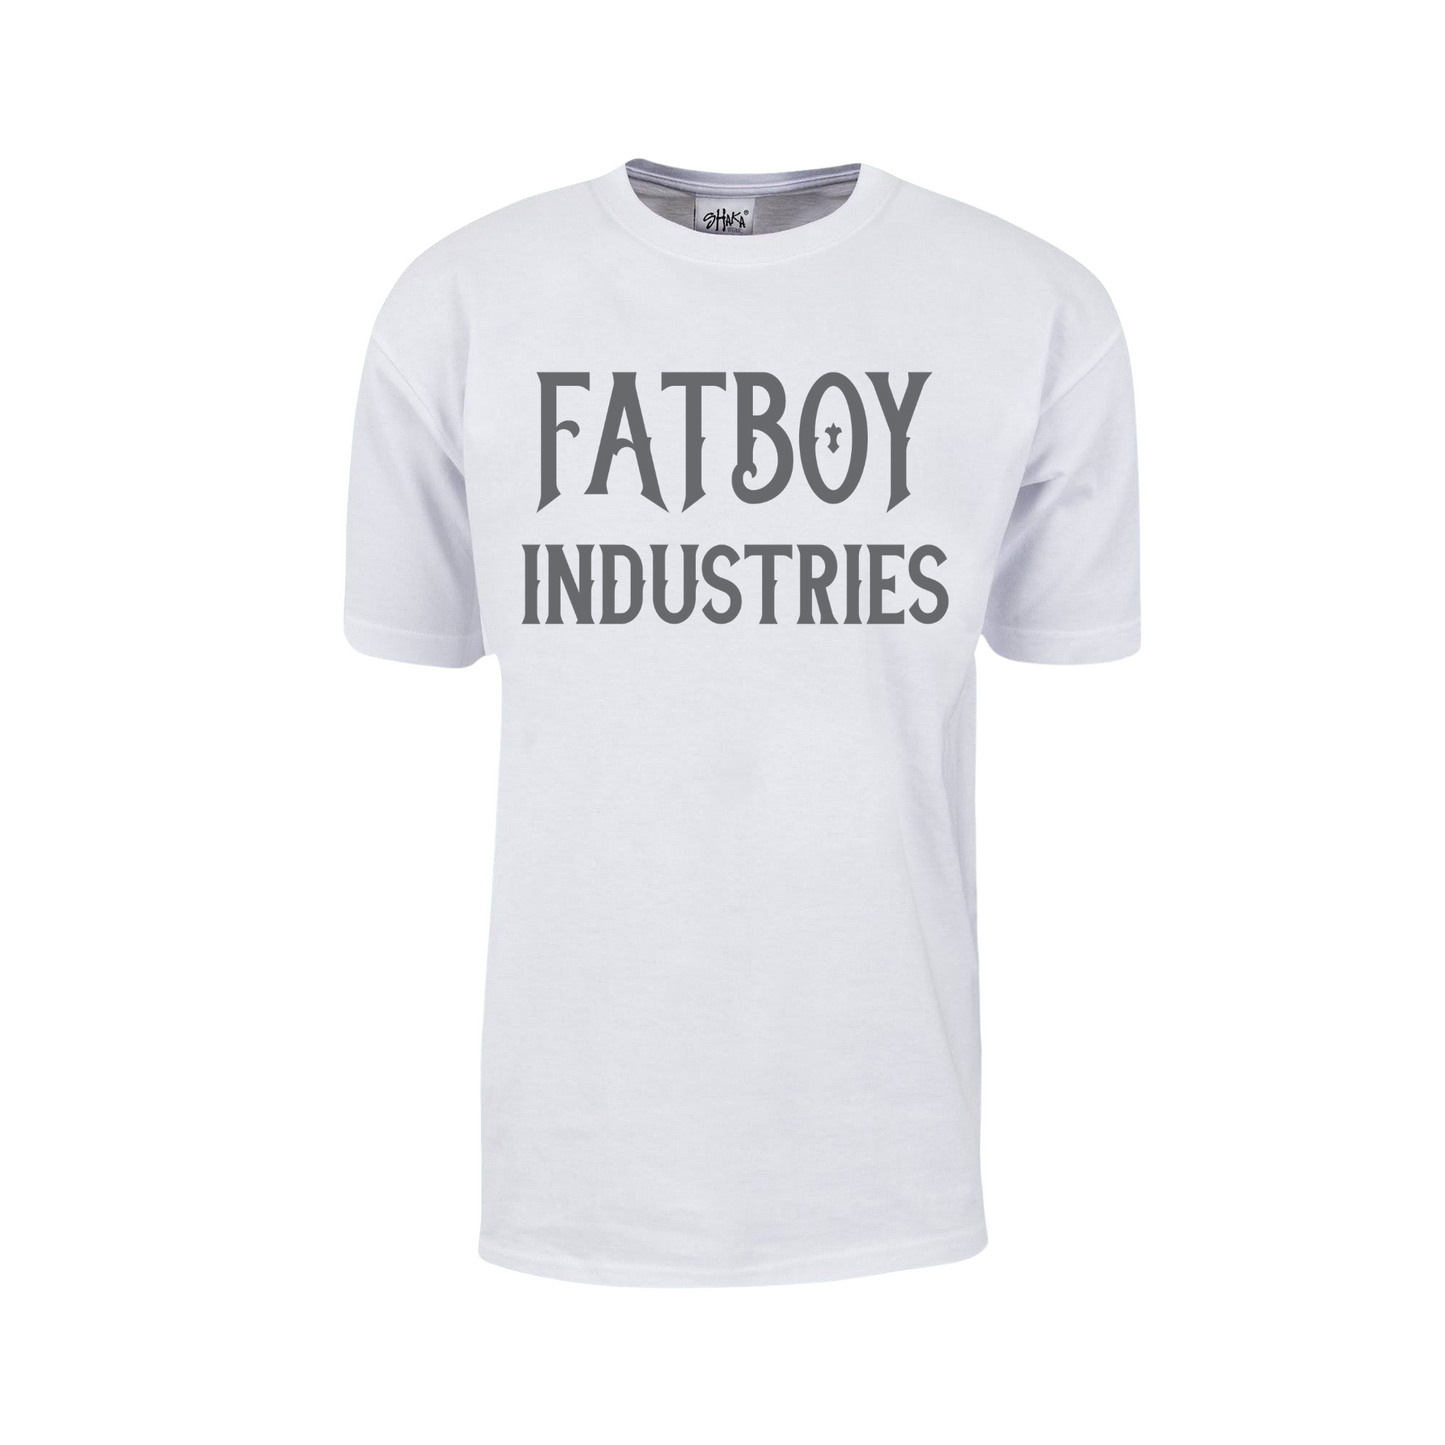 Fatboy Industries - Gray